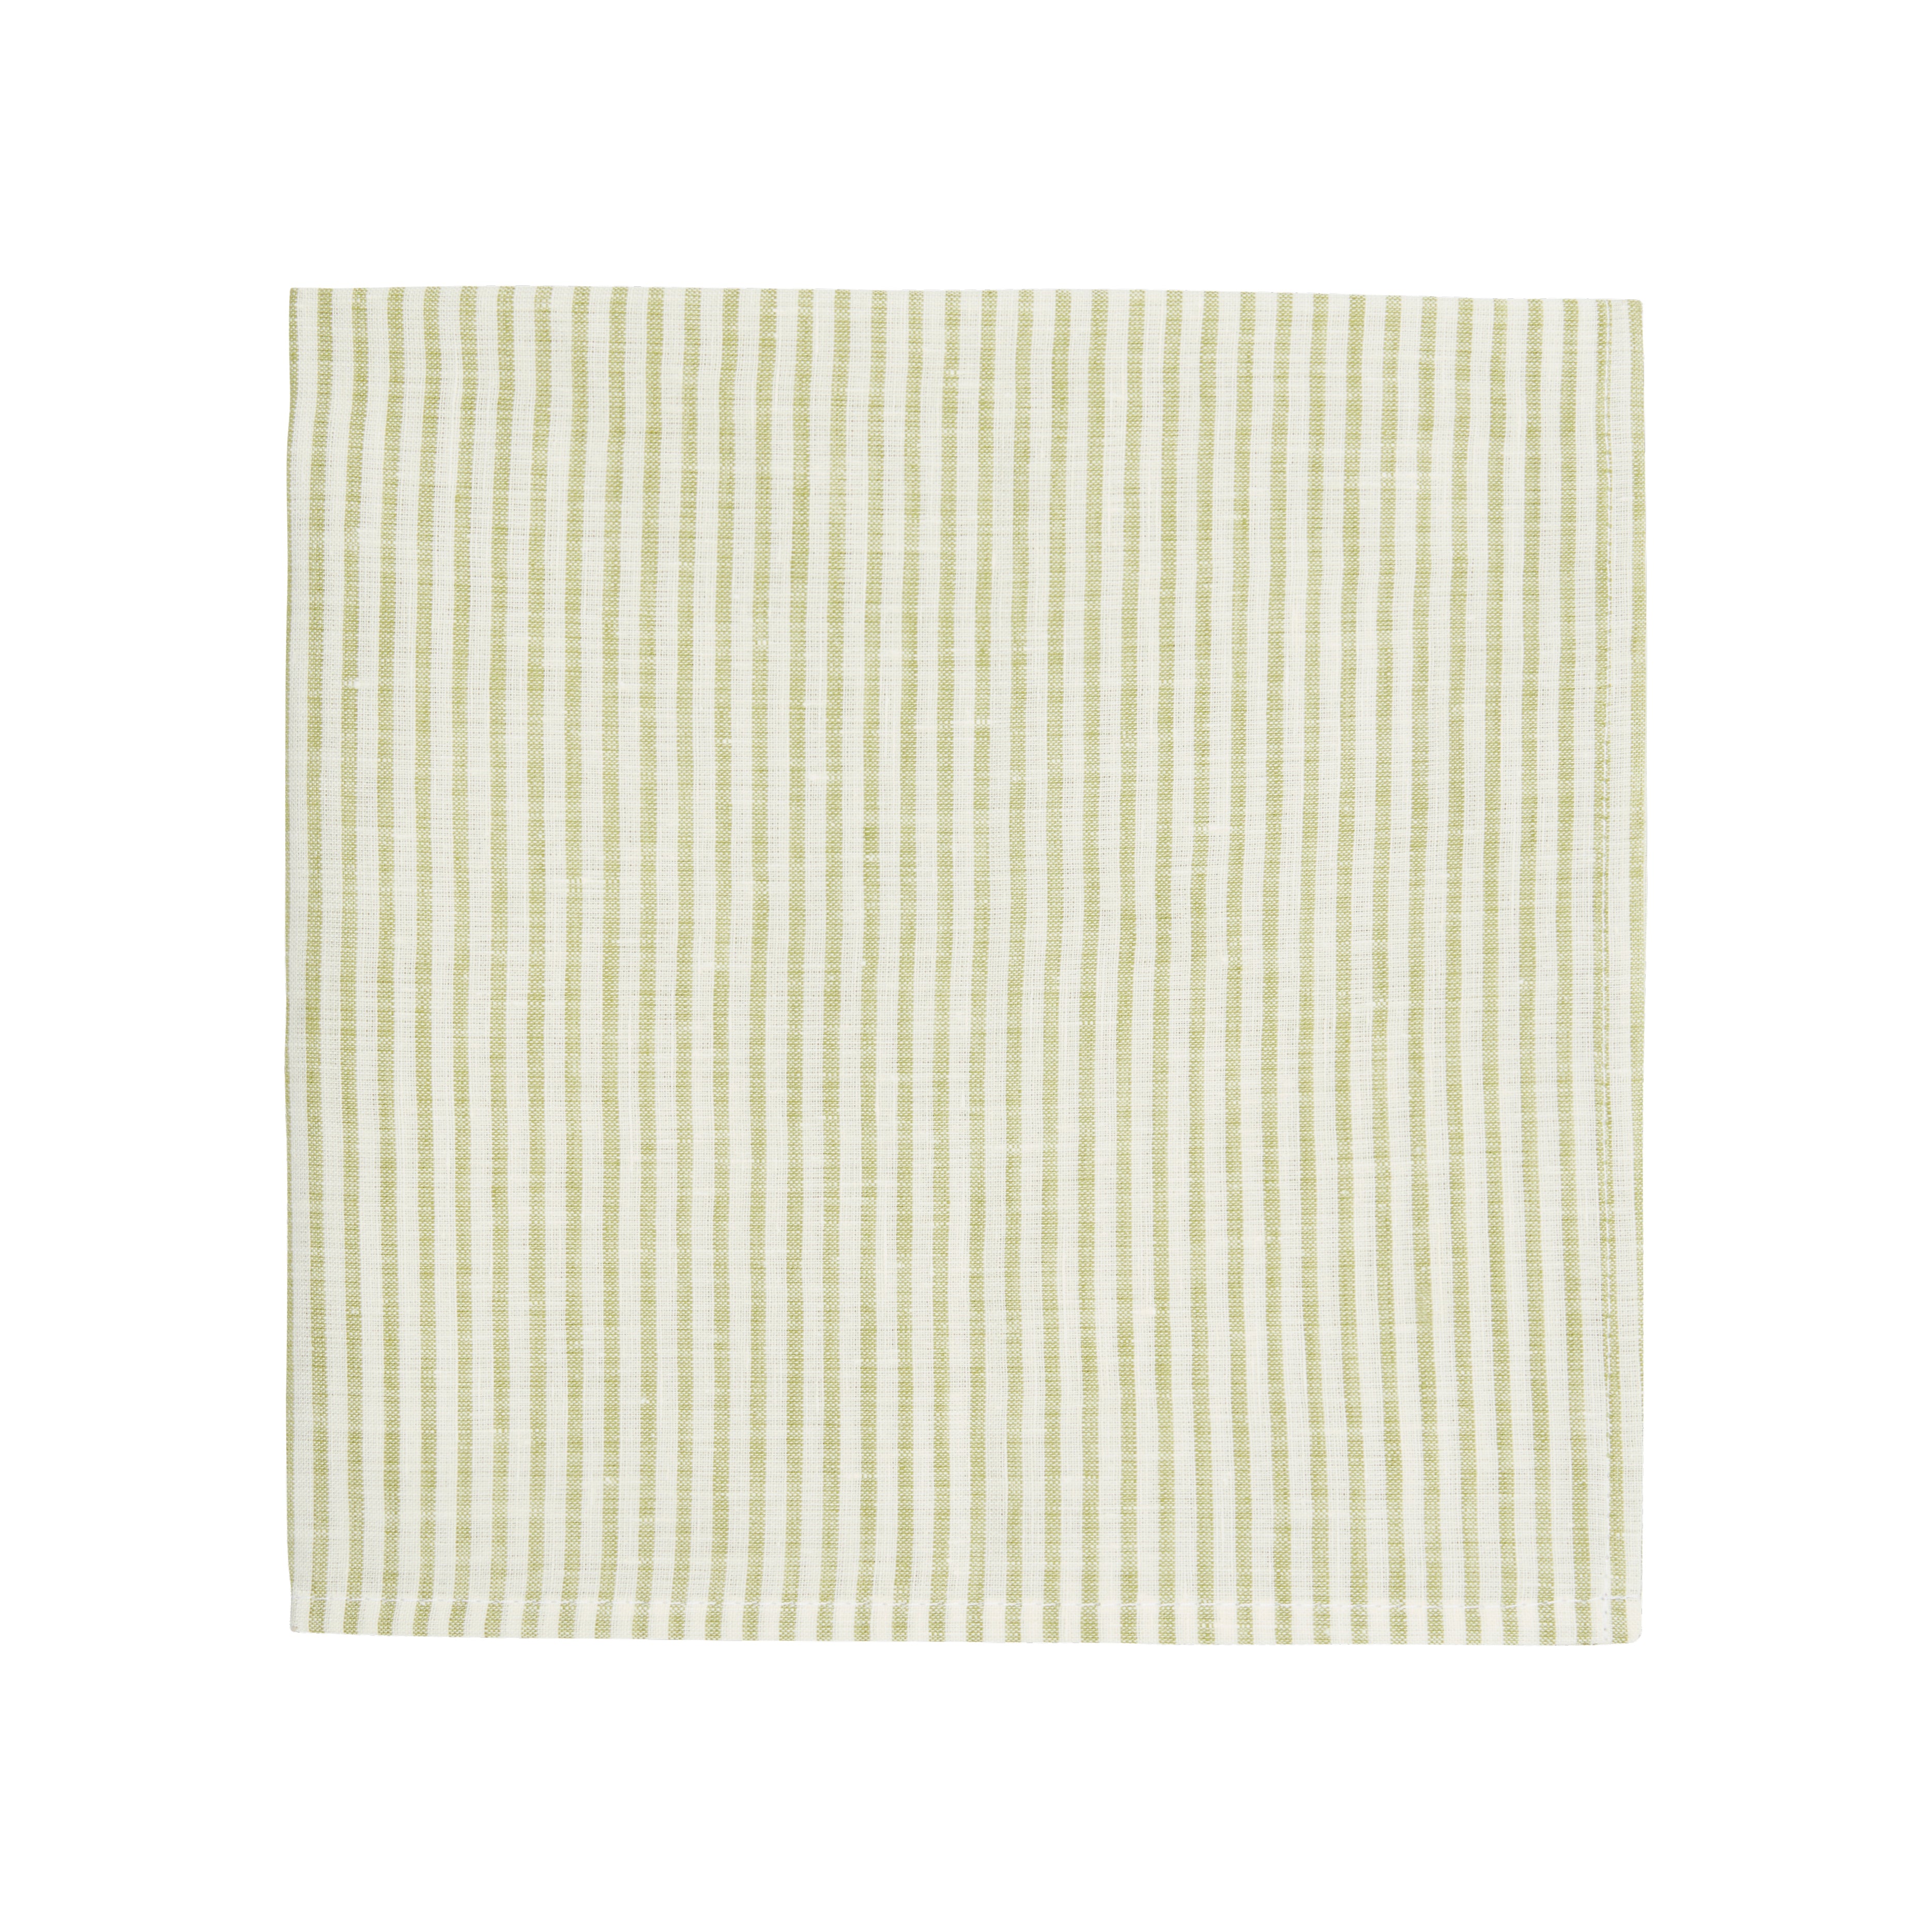 Napkin Stripe 54cm x 54cm - Green and White